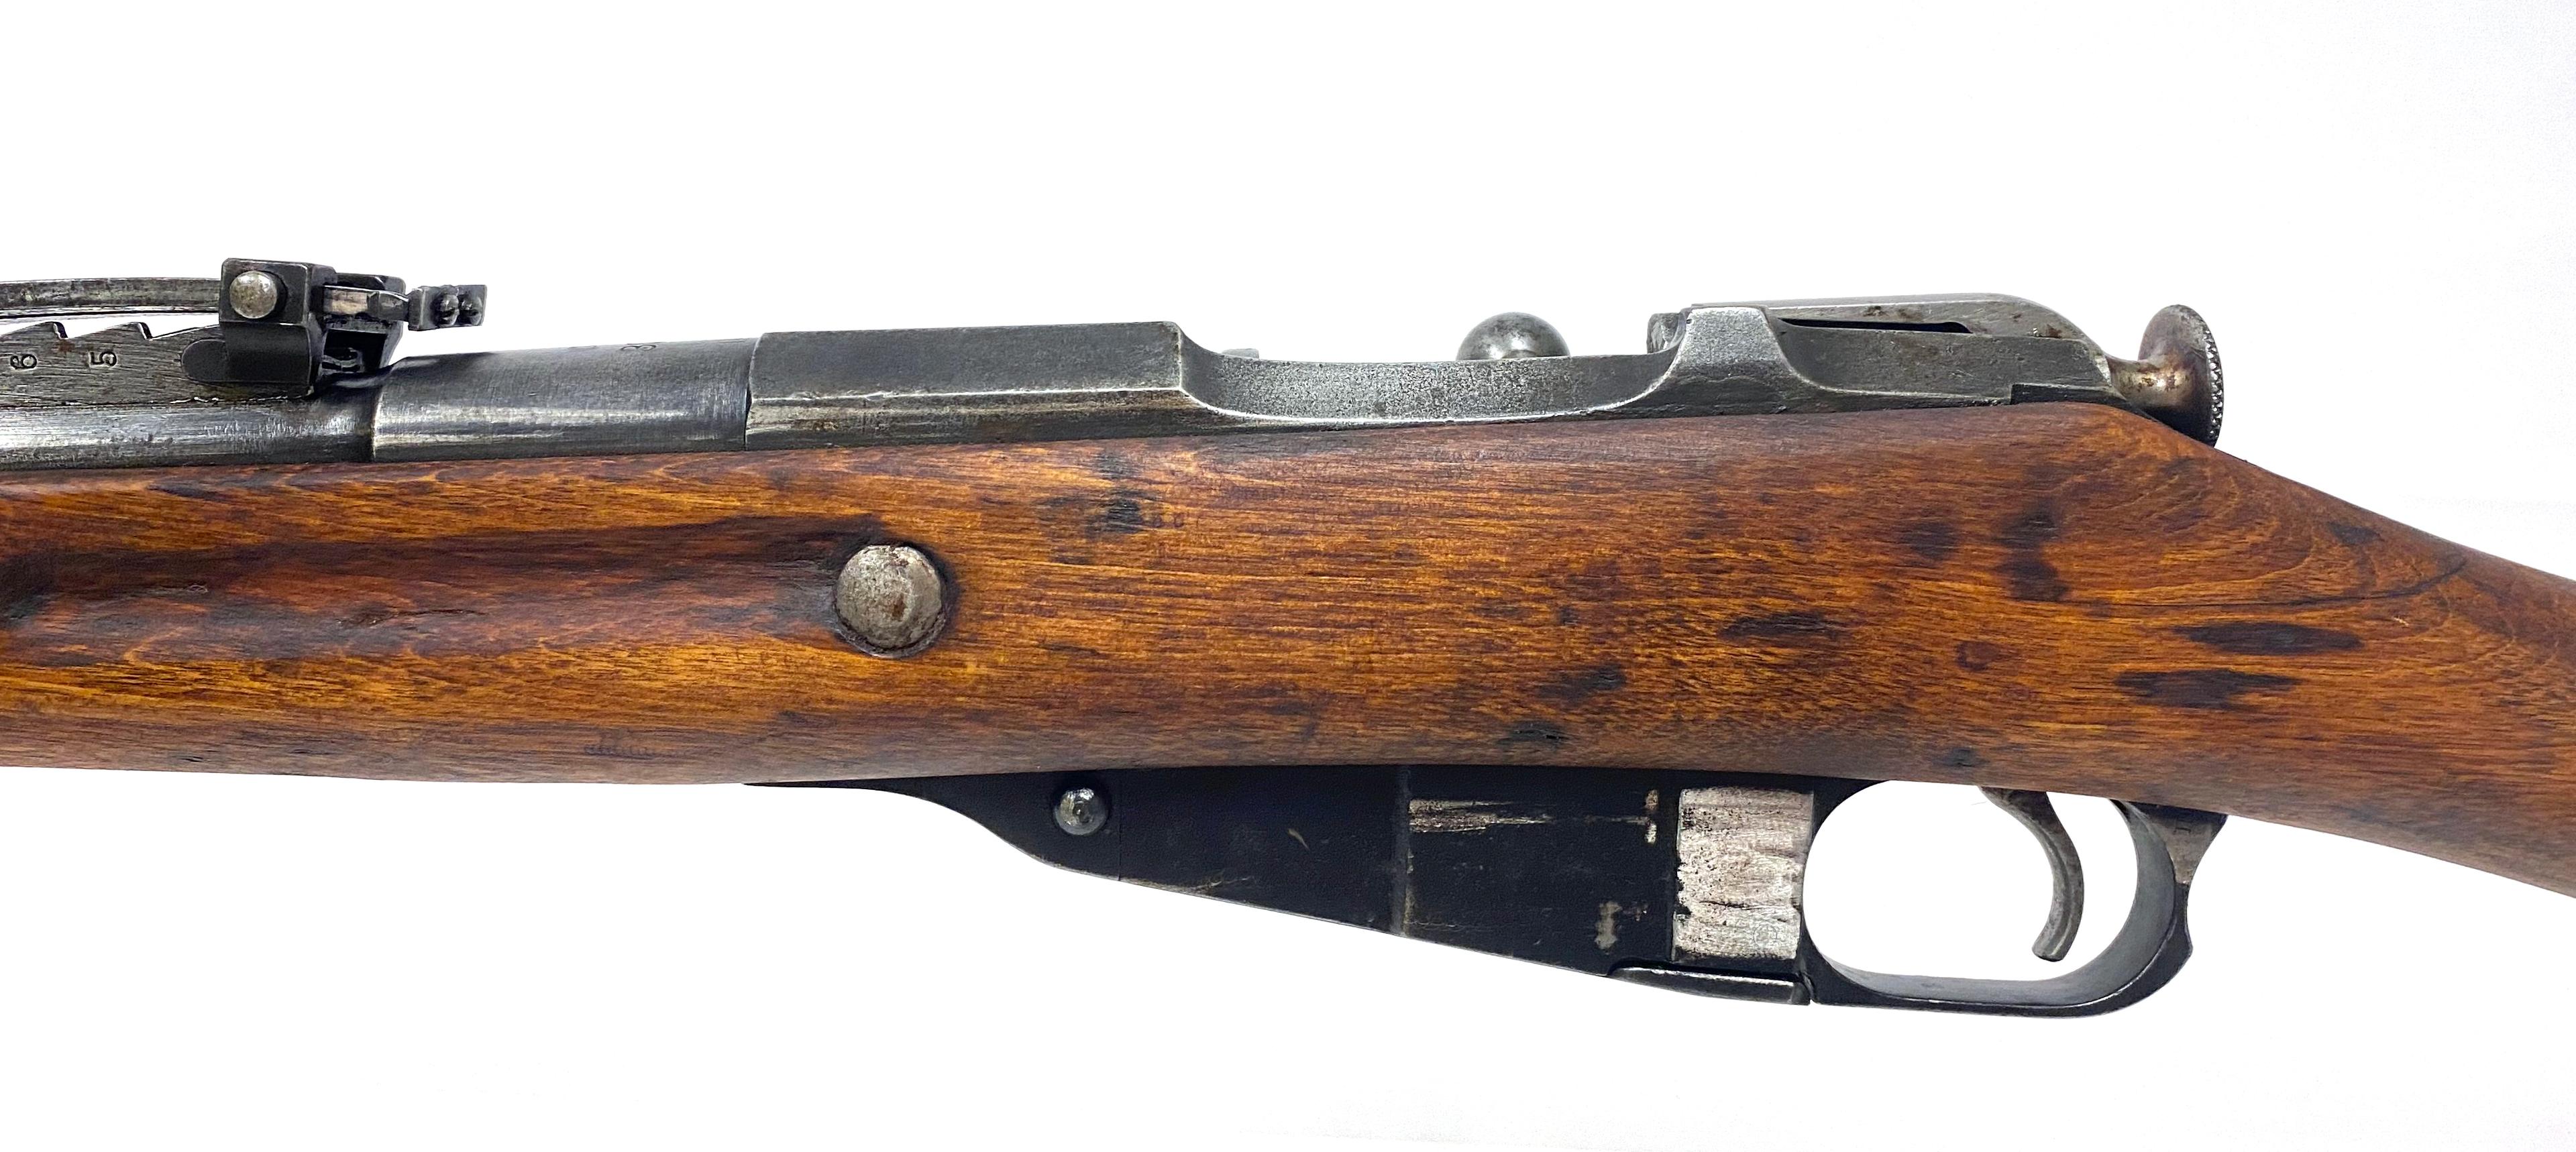 1928 Tikka M27 Mosin Nagant Bolt Action 7.62x54r Hex Receiver Rifle